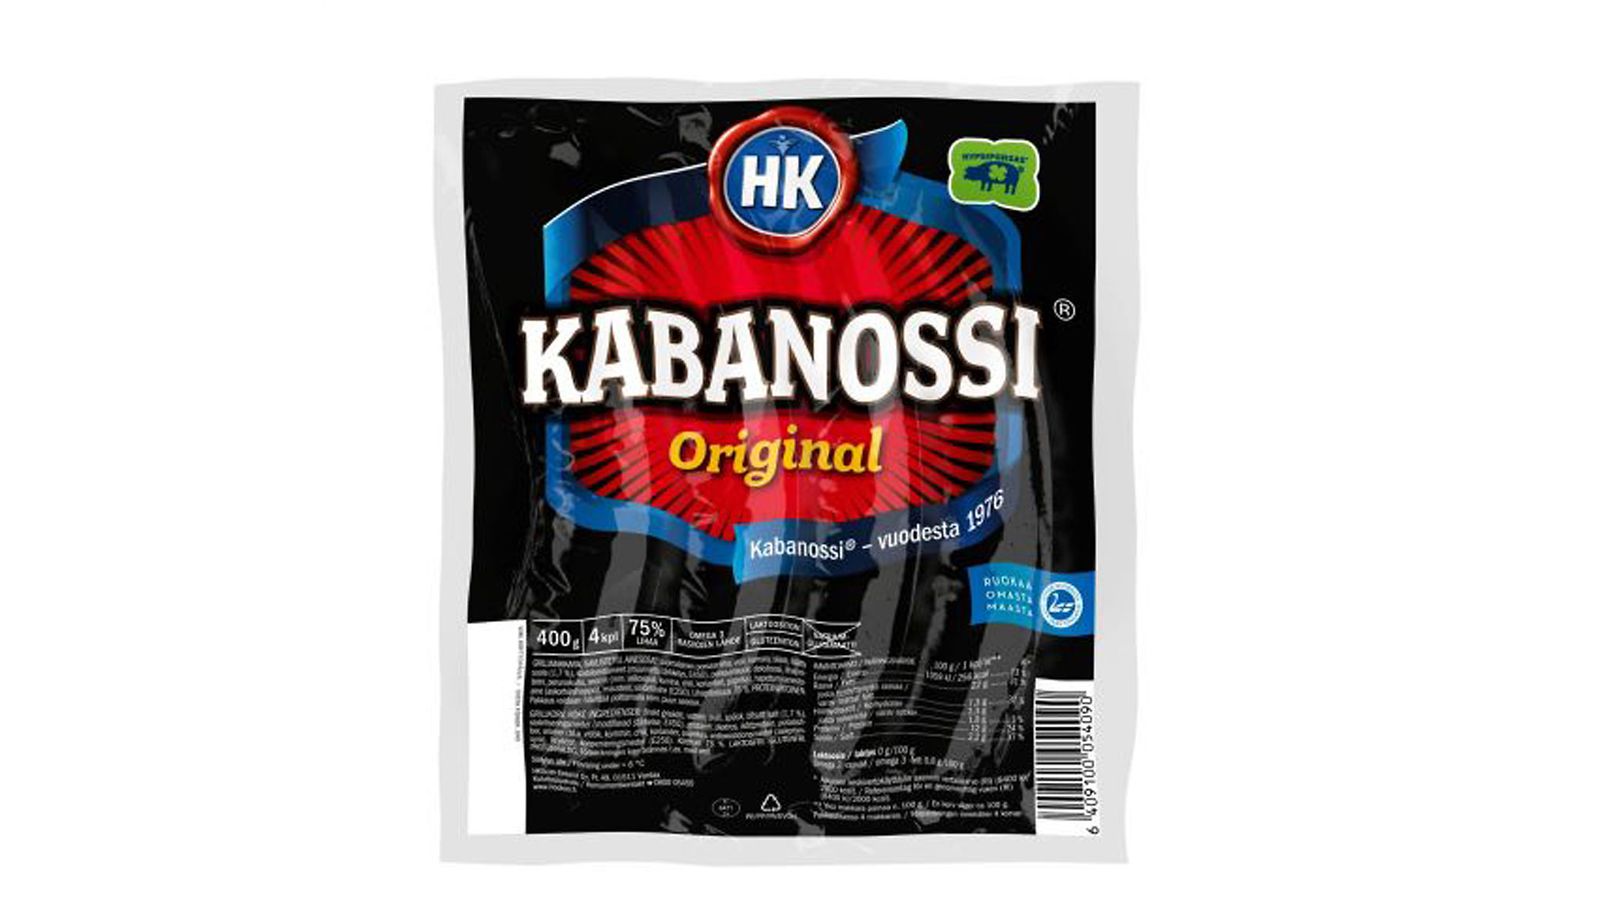 Kabanossi